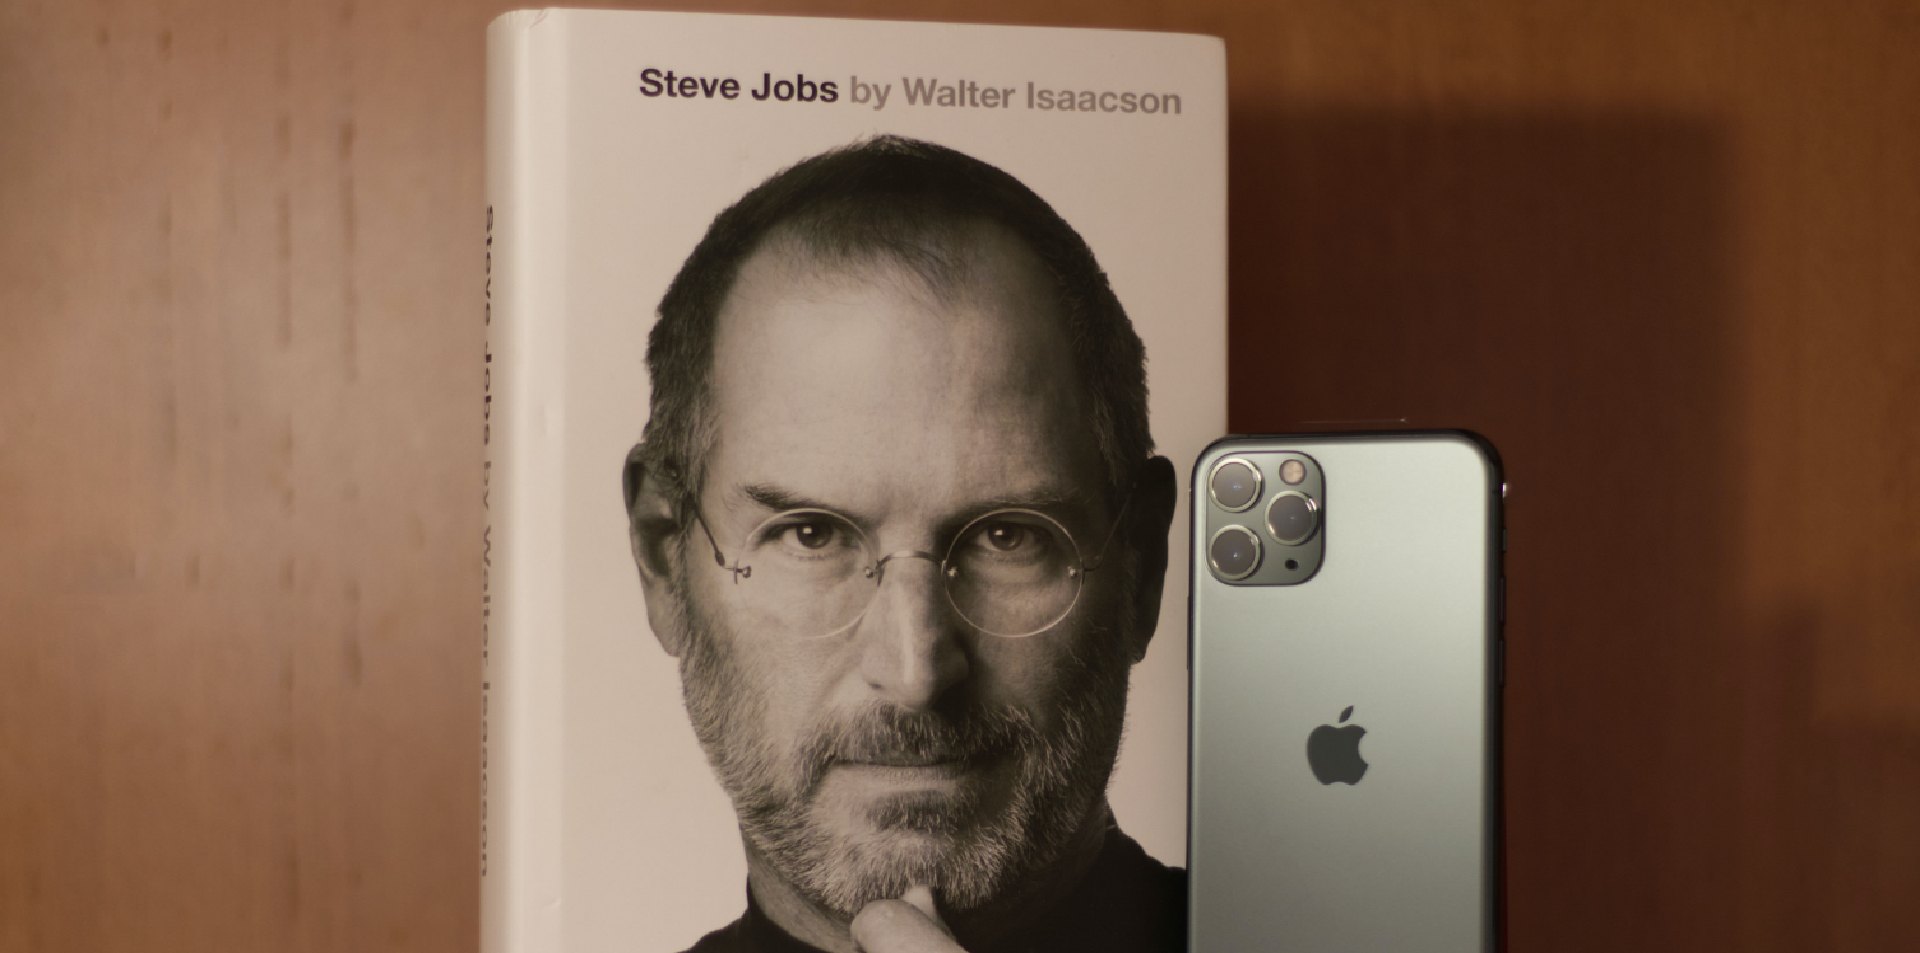 10 practical business leadership tips from Steve Jobs